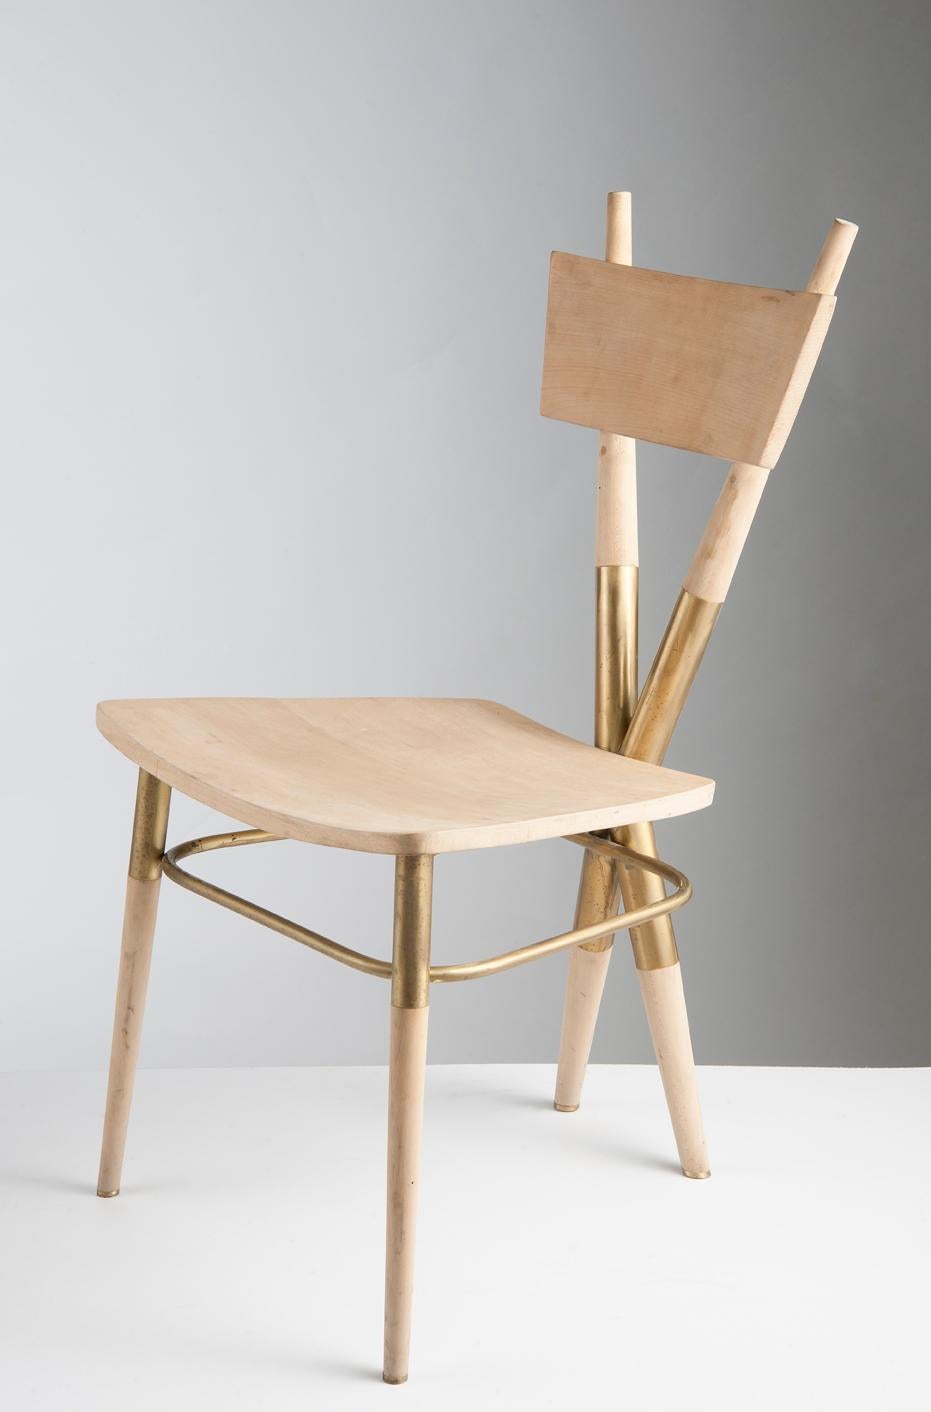 Turkish X Set of Wooden Chairs by Sema Topaloglu